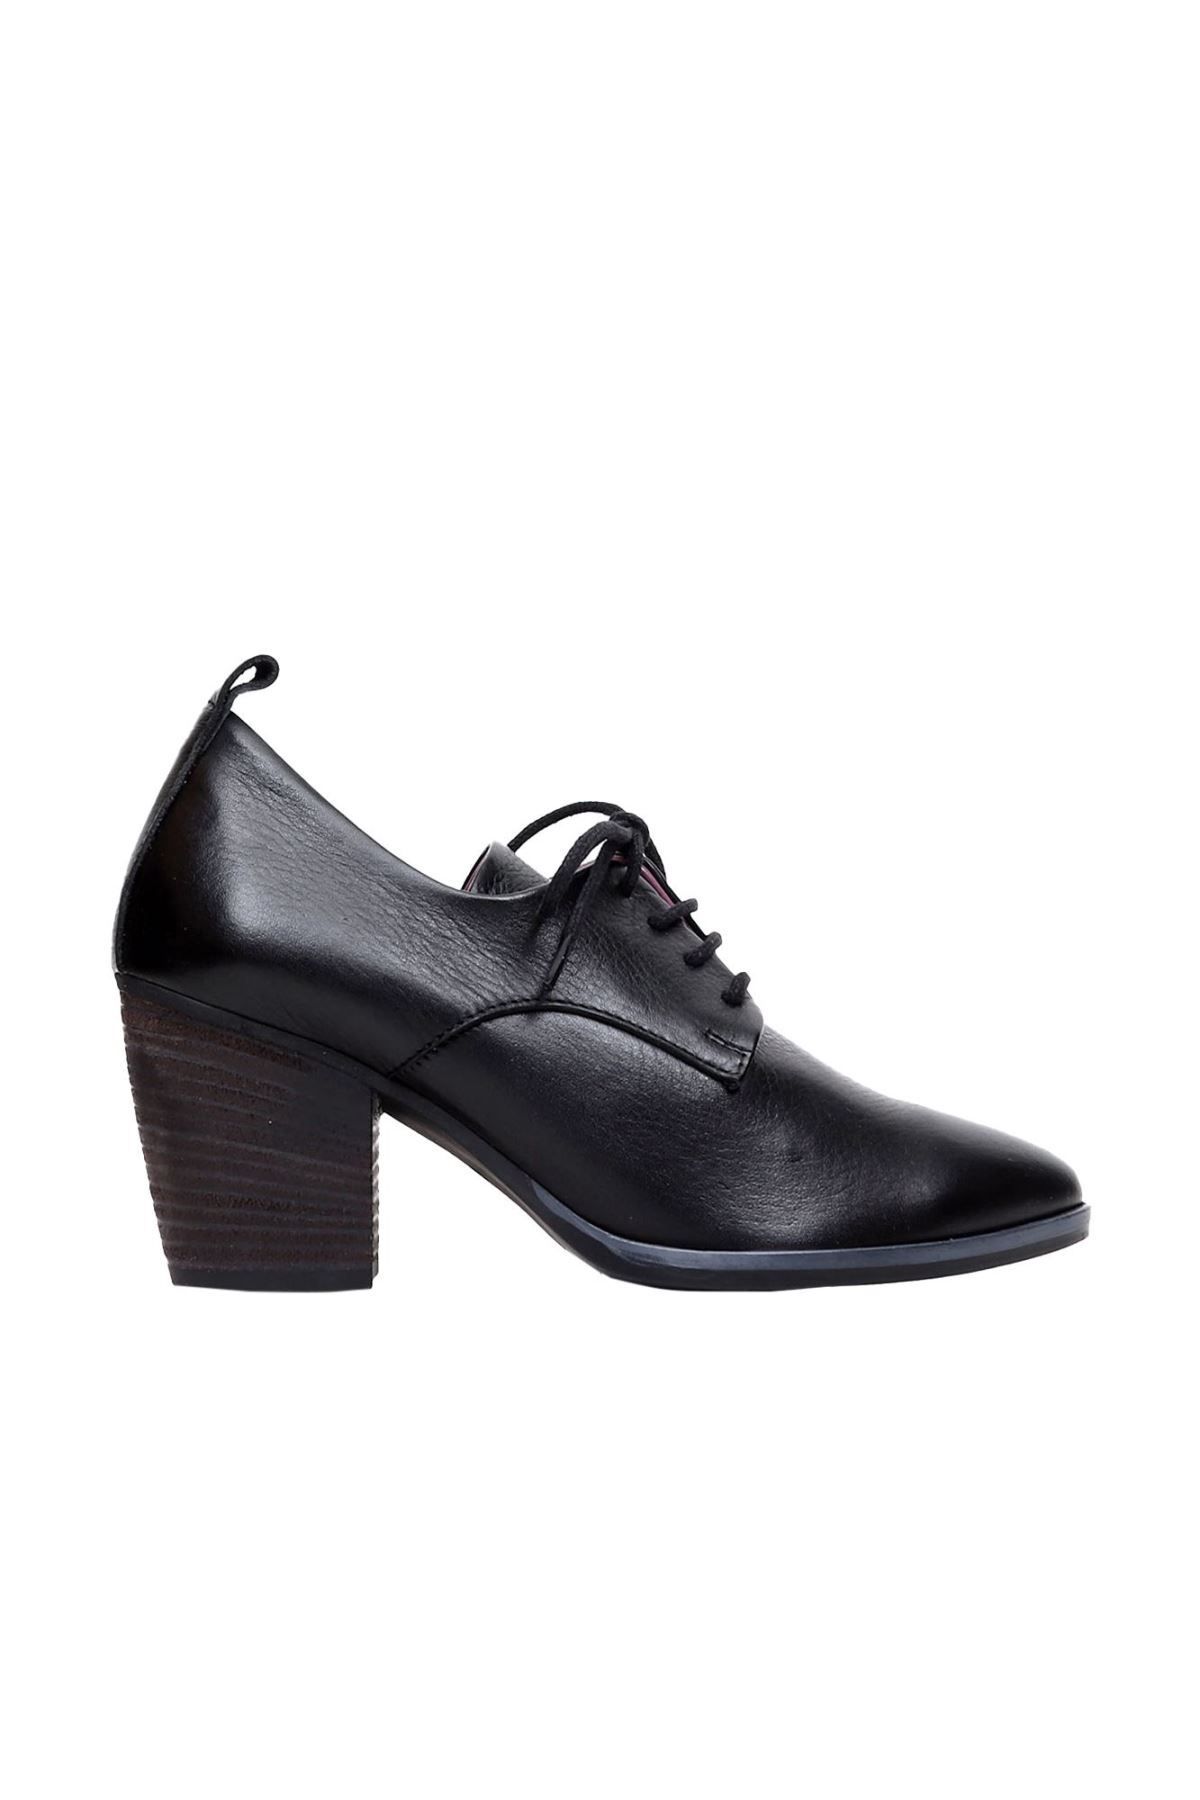 BUENO Shoes Siyah Deri Kadın Topuklu Ayakkabı